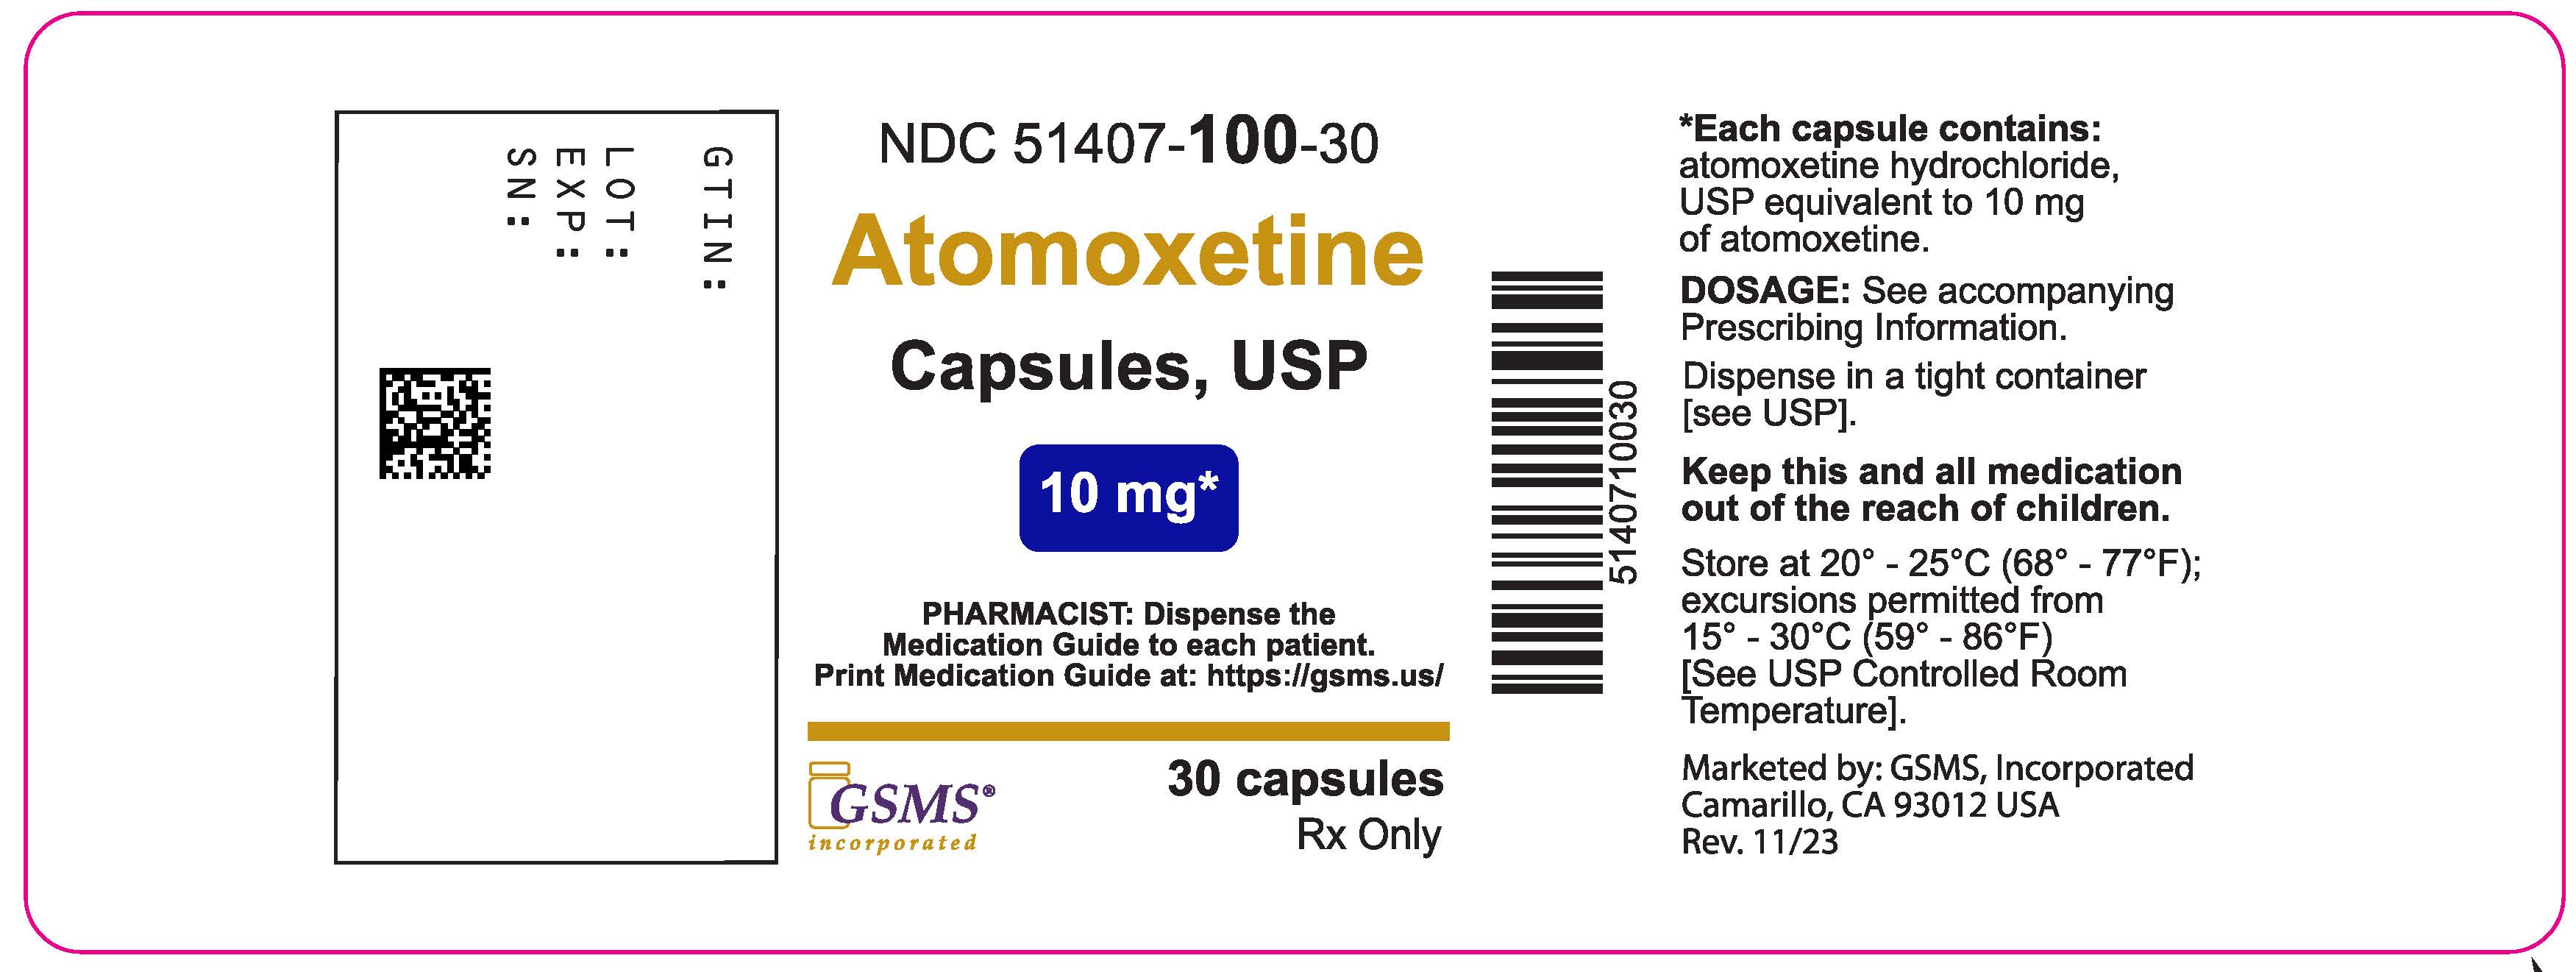 51407-100-30OL - Atomoxetine Caps - 30ct - Rev 1123.jpg